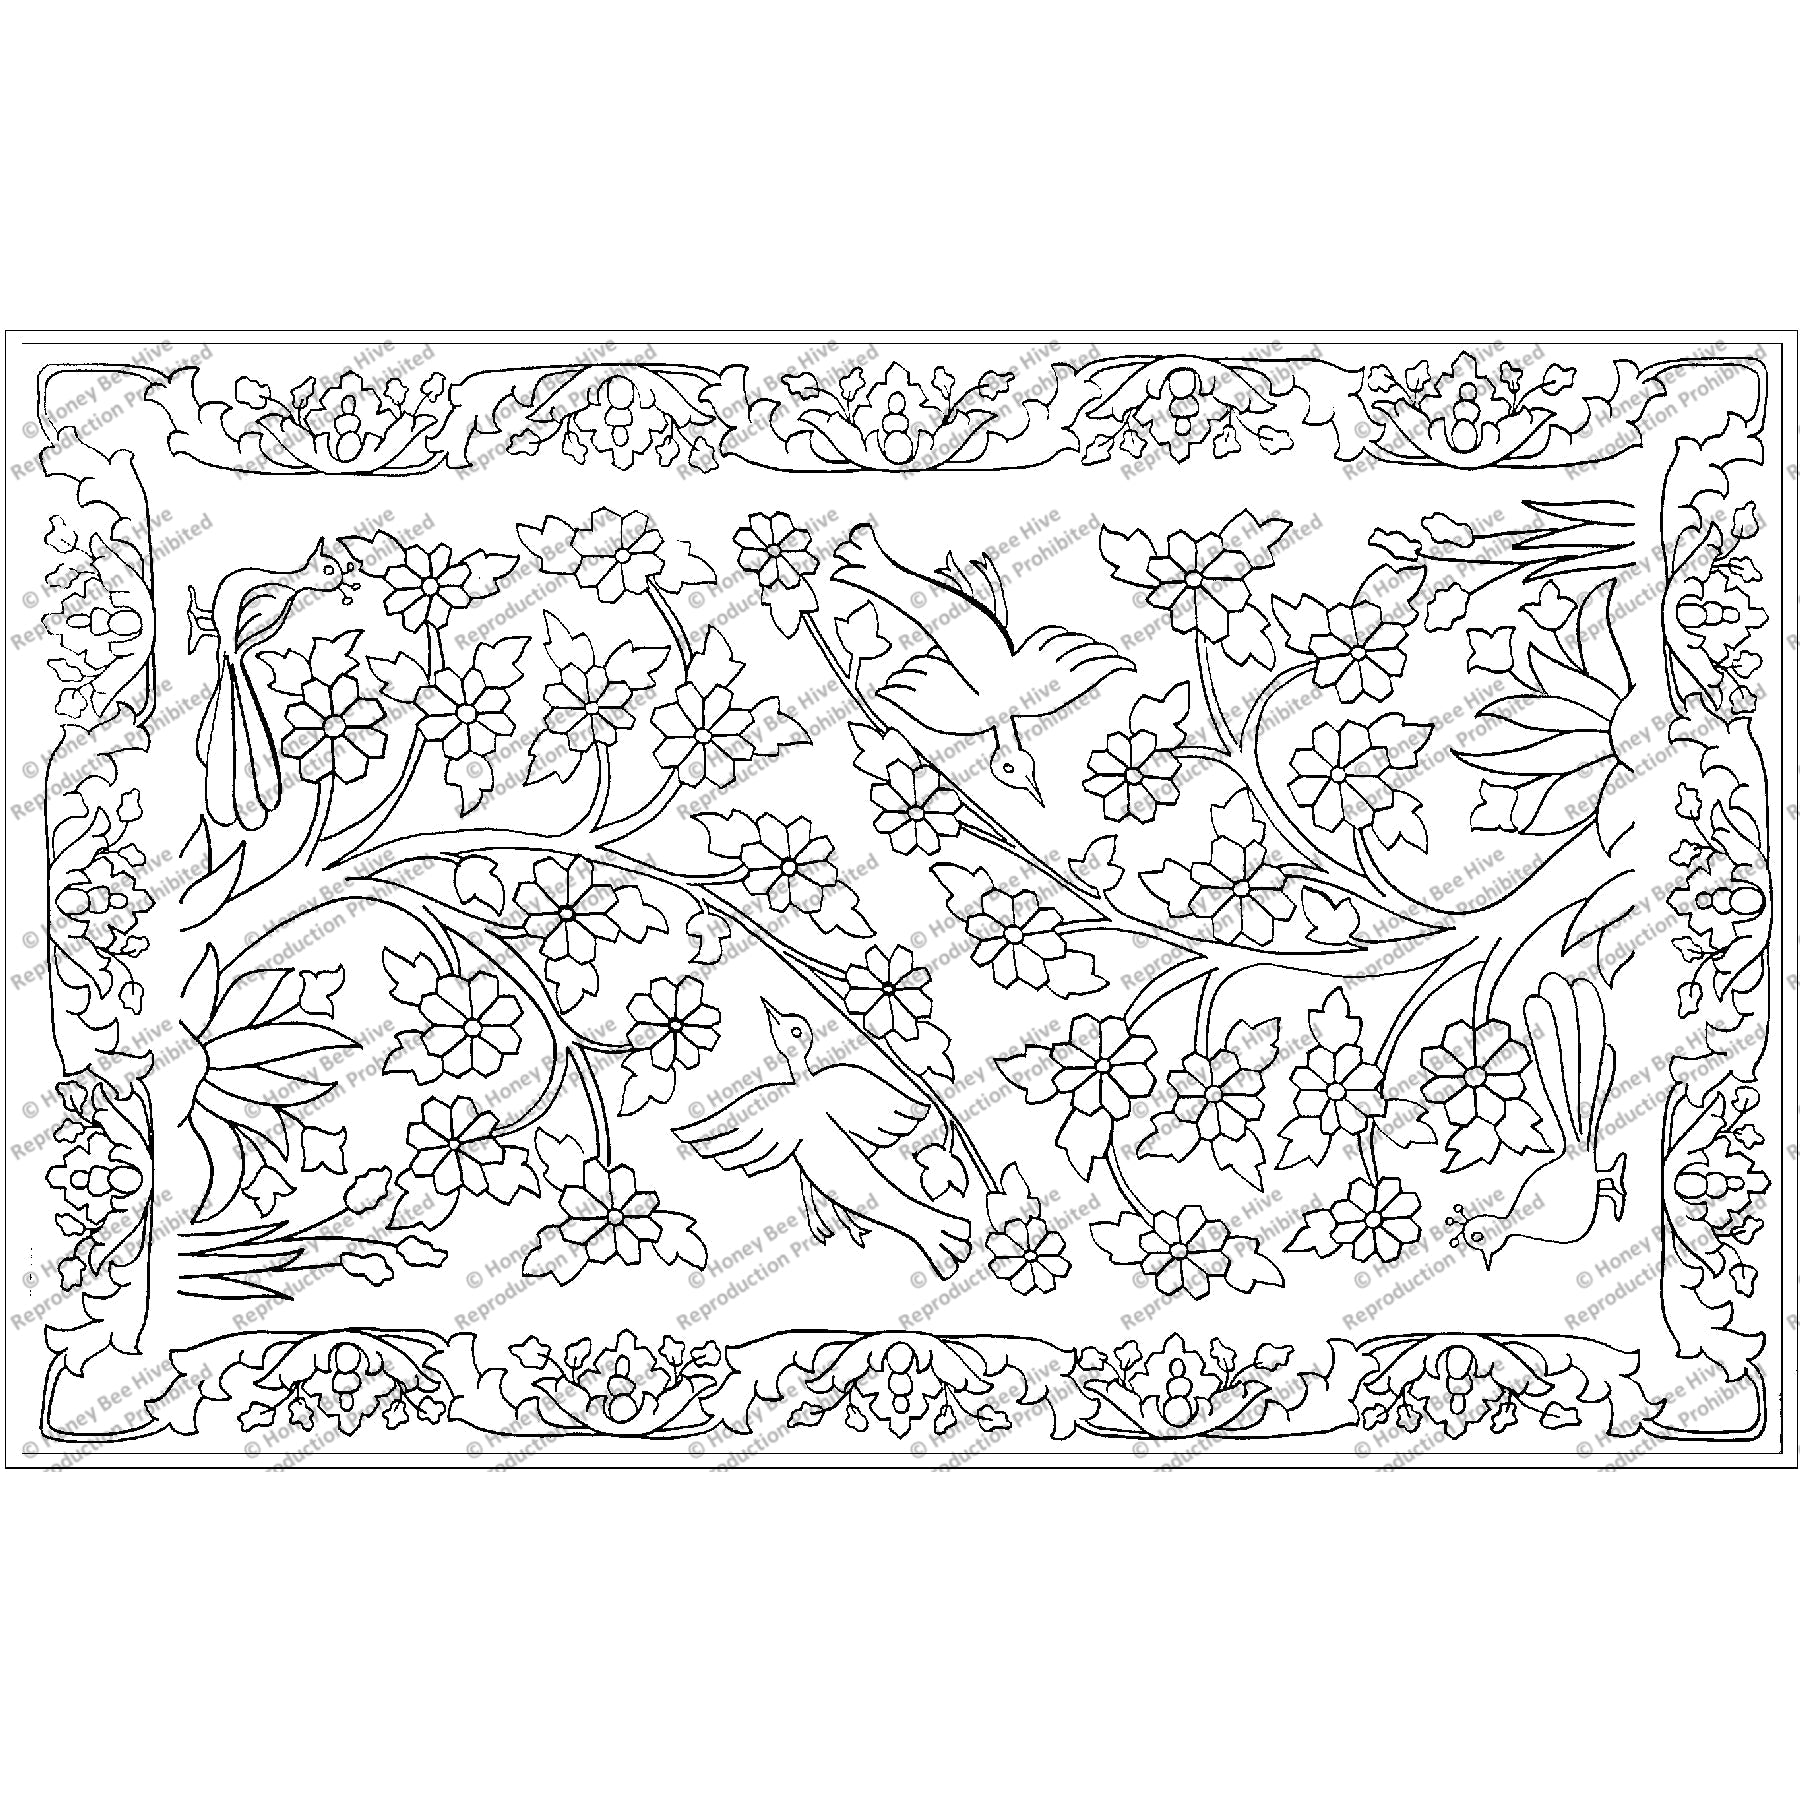 In a Persian Garden, rug hooking pattern